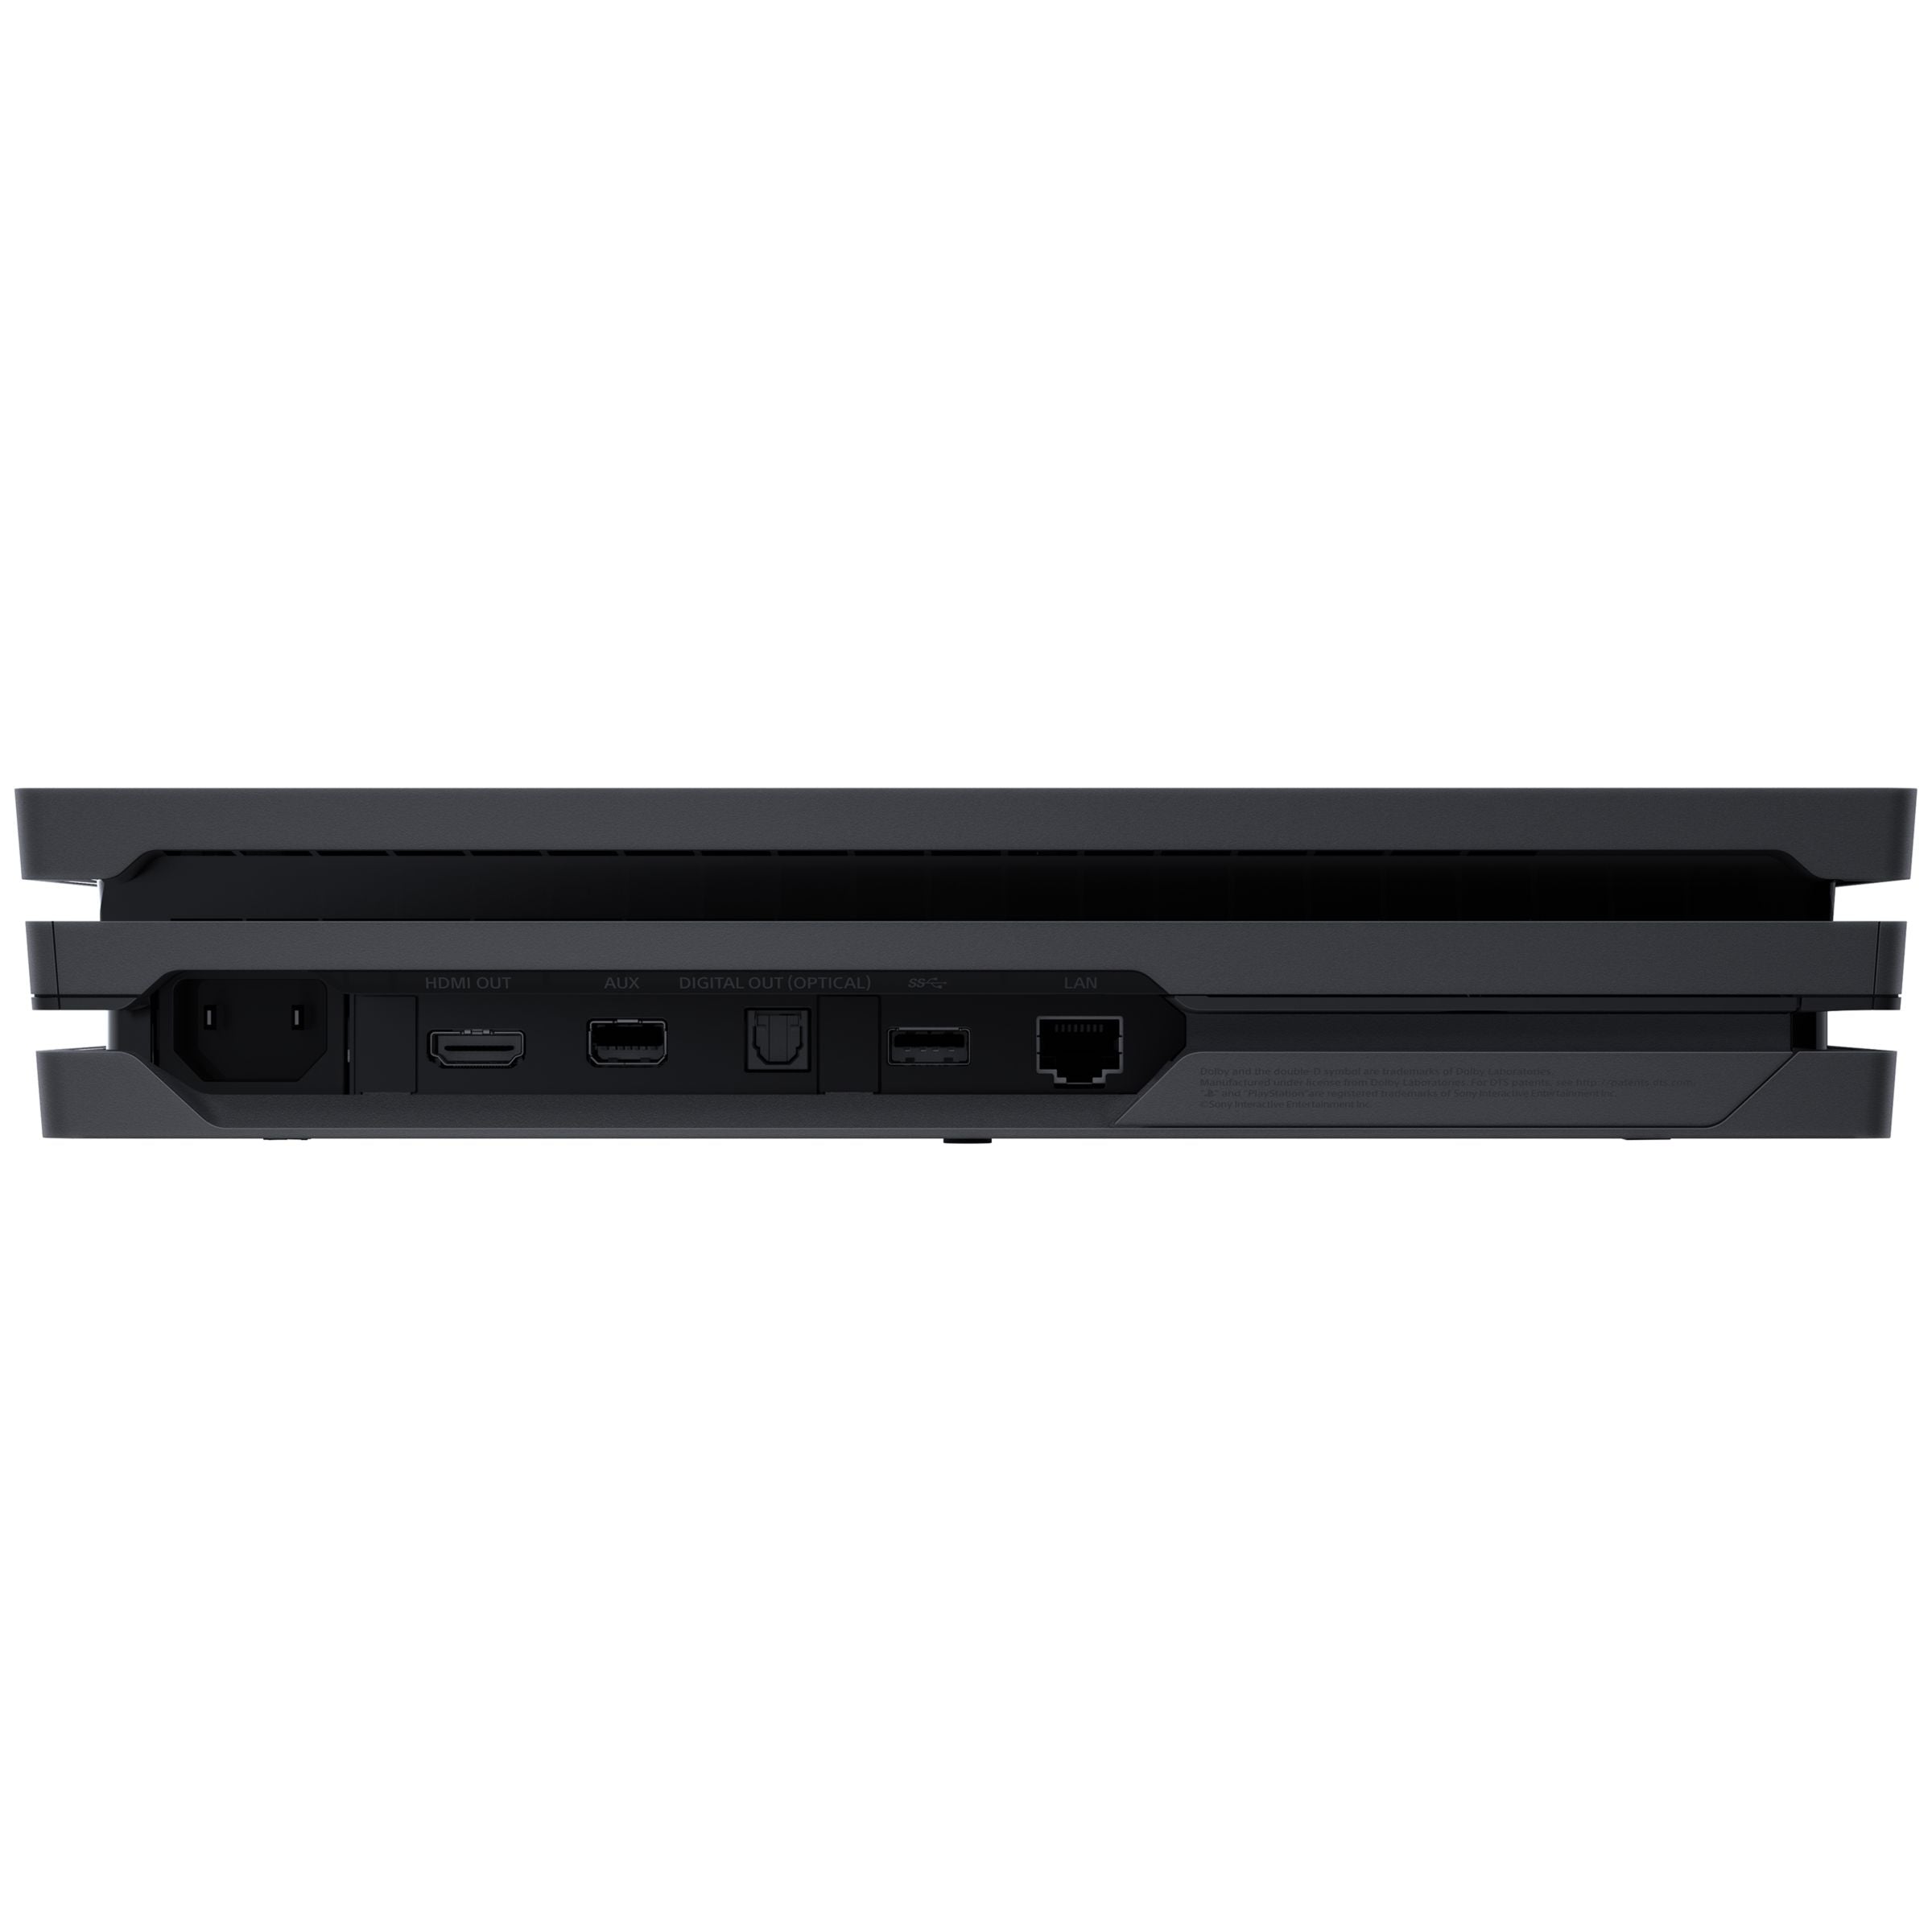 Sony PlayStation 4 Pro Console, Black (1TB) - Pristine Condition